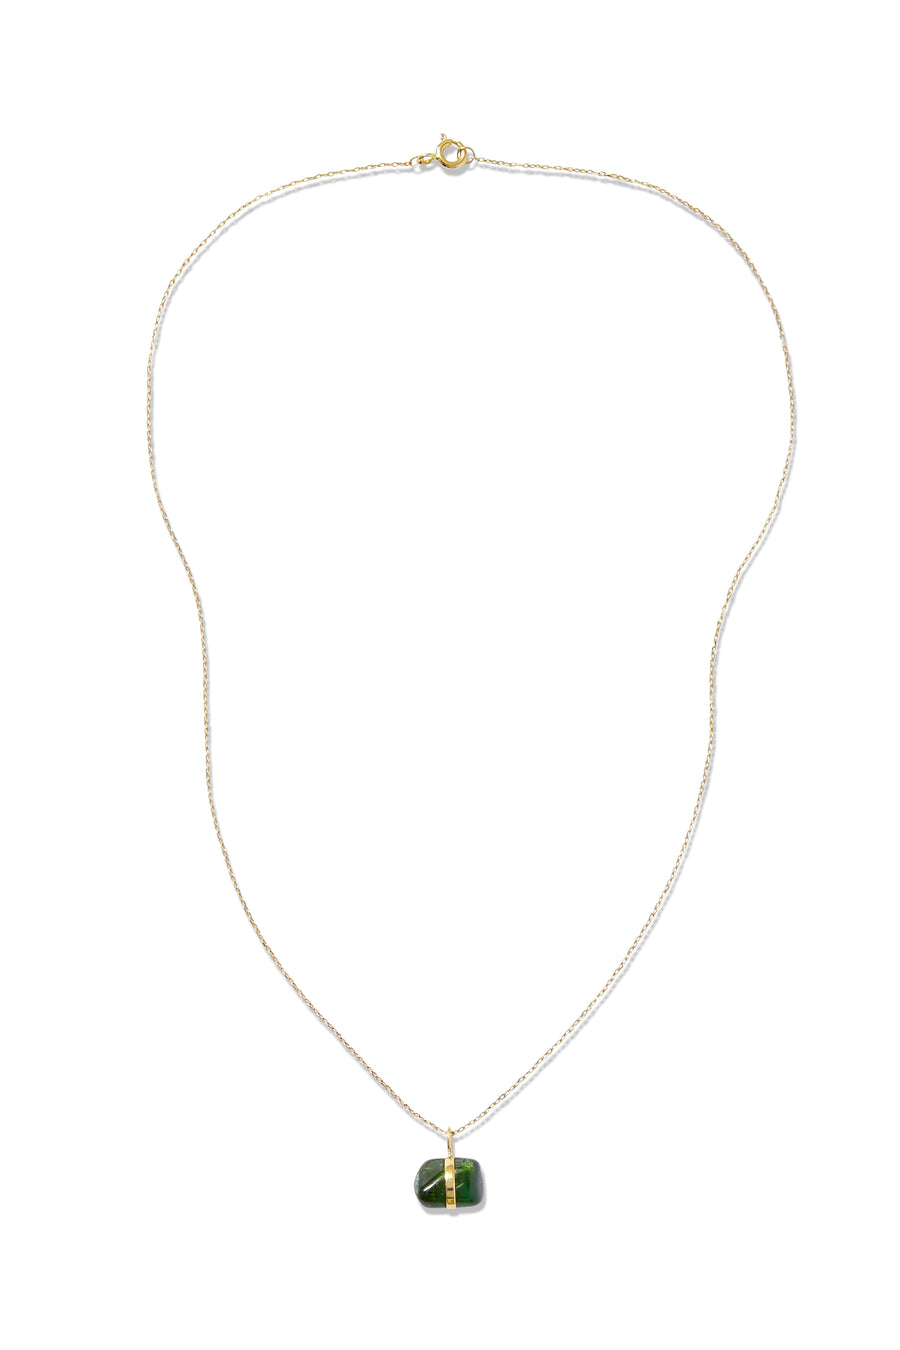 October Birthstone Tourmaline Gold Bar Charm Necklace